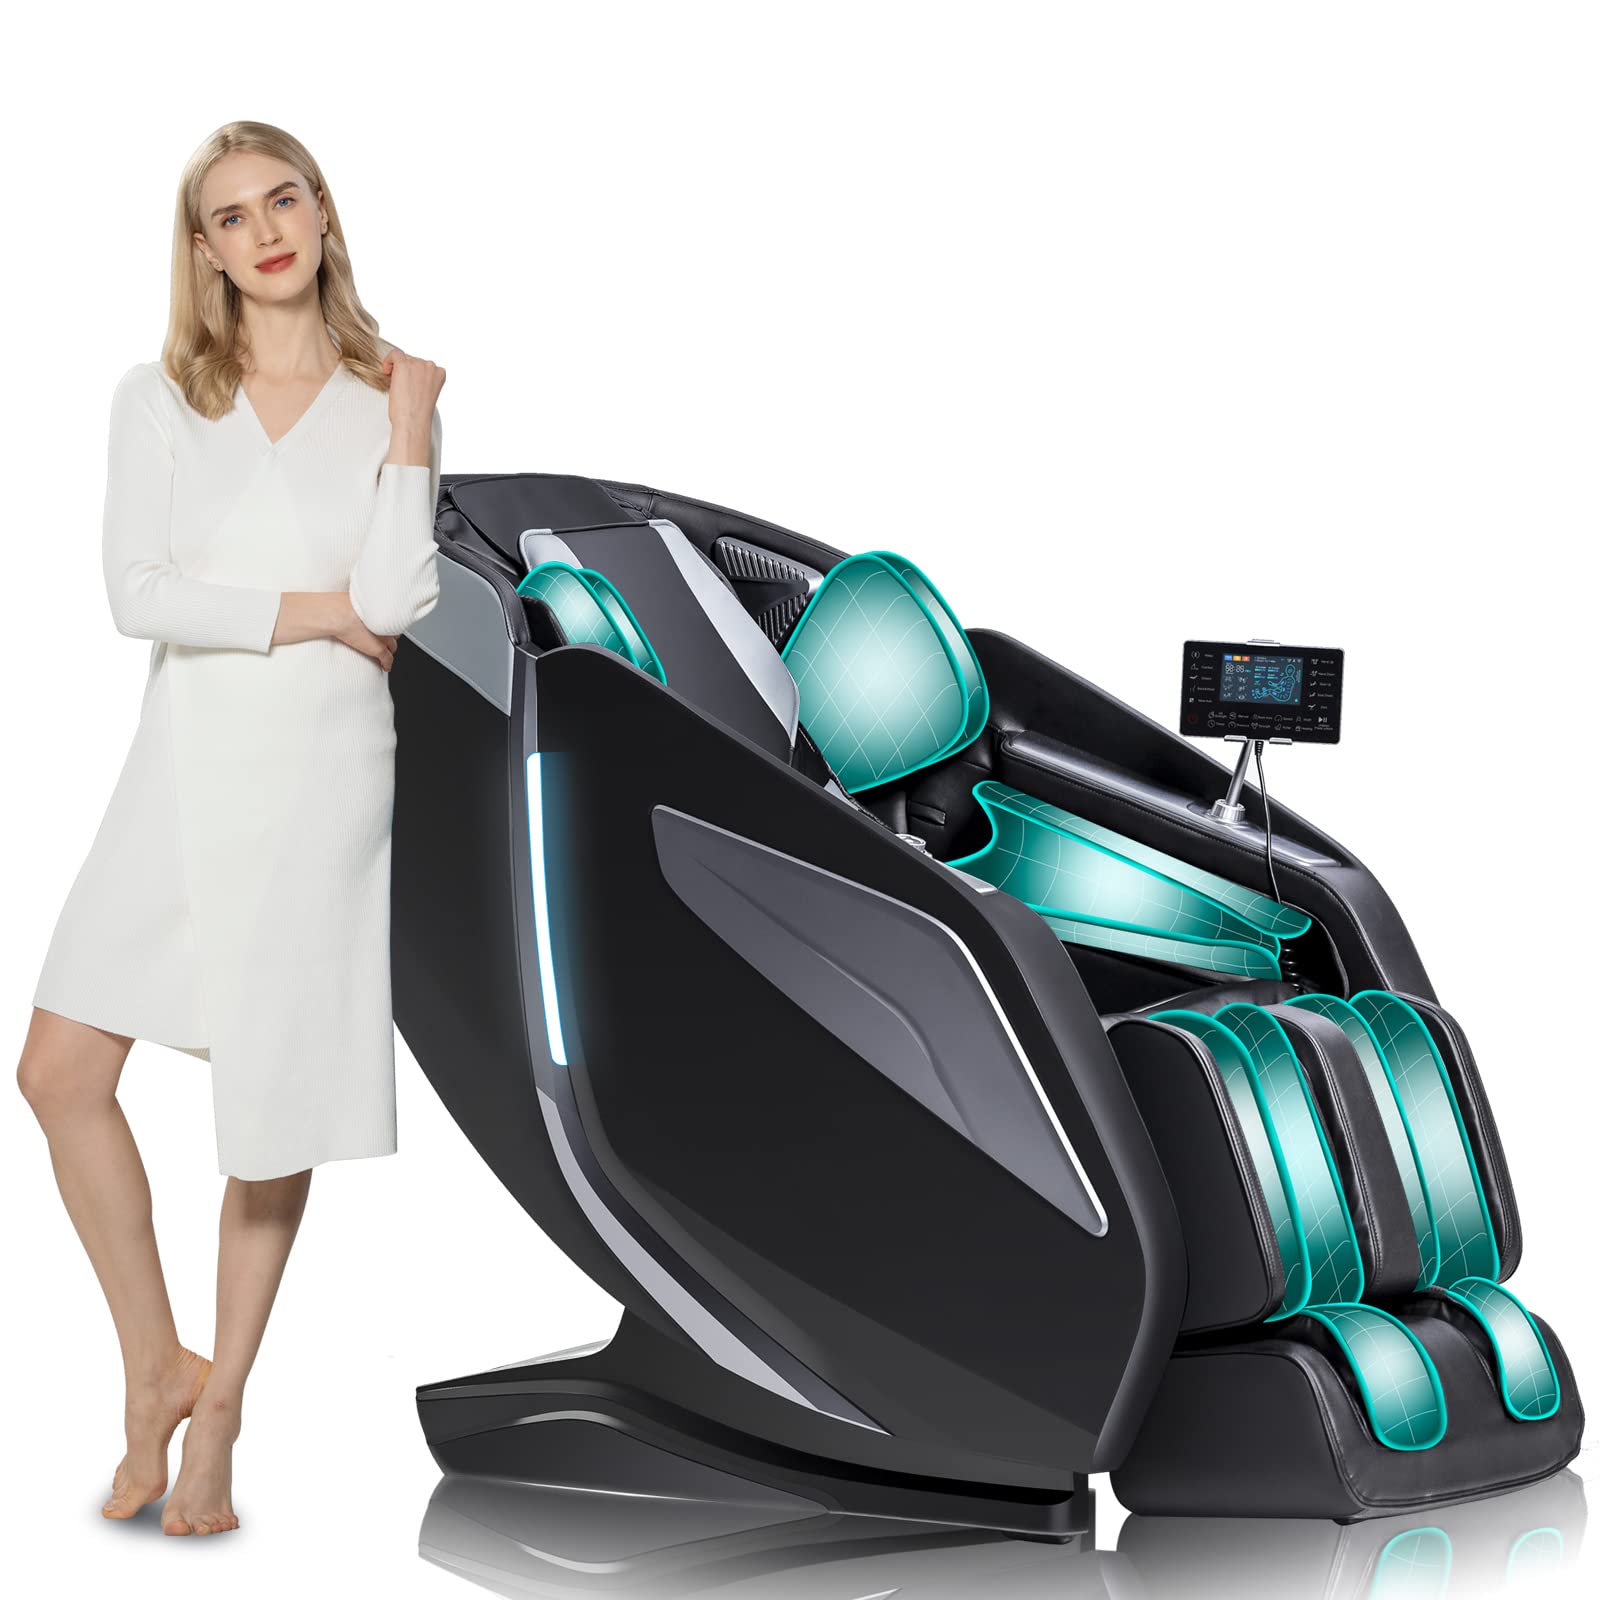 HealthRelife Massage Chair Full Body Recliner with Heat Zero Gravity Air Pressure SL Track Intelligent Voice Control Bluetooth S